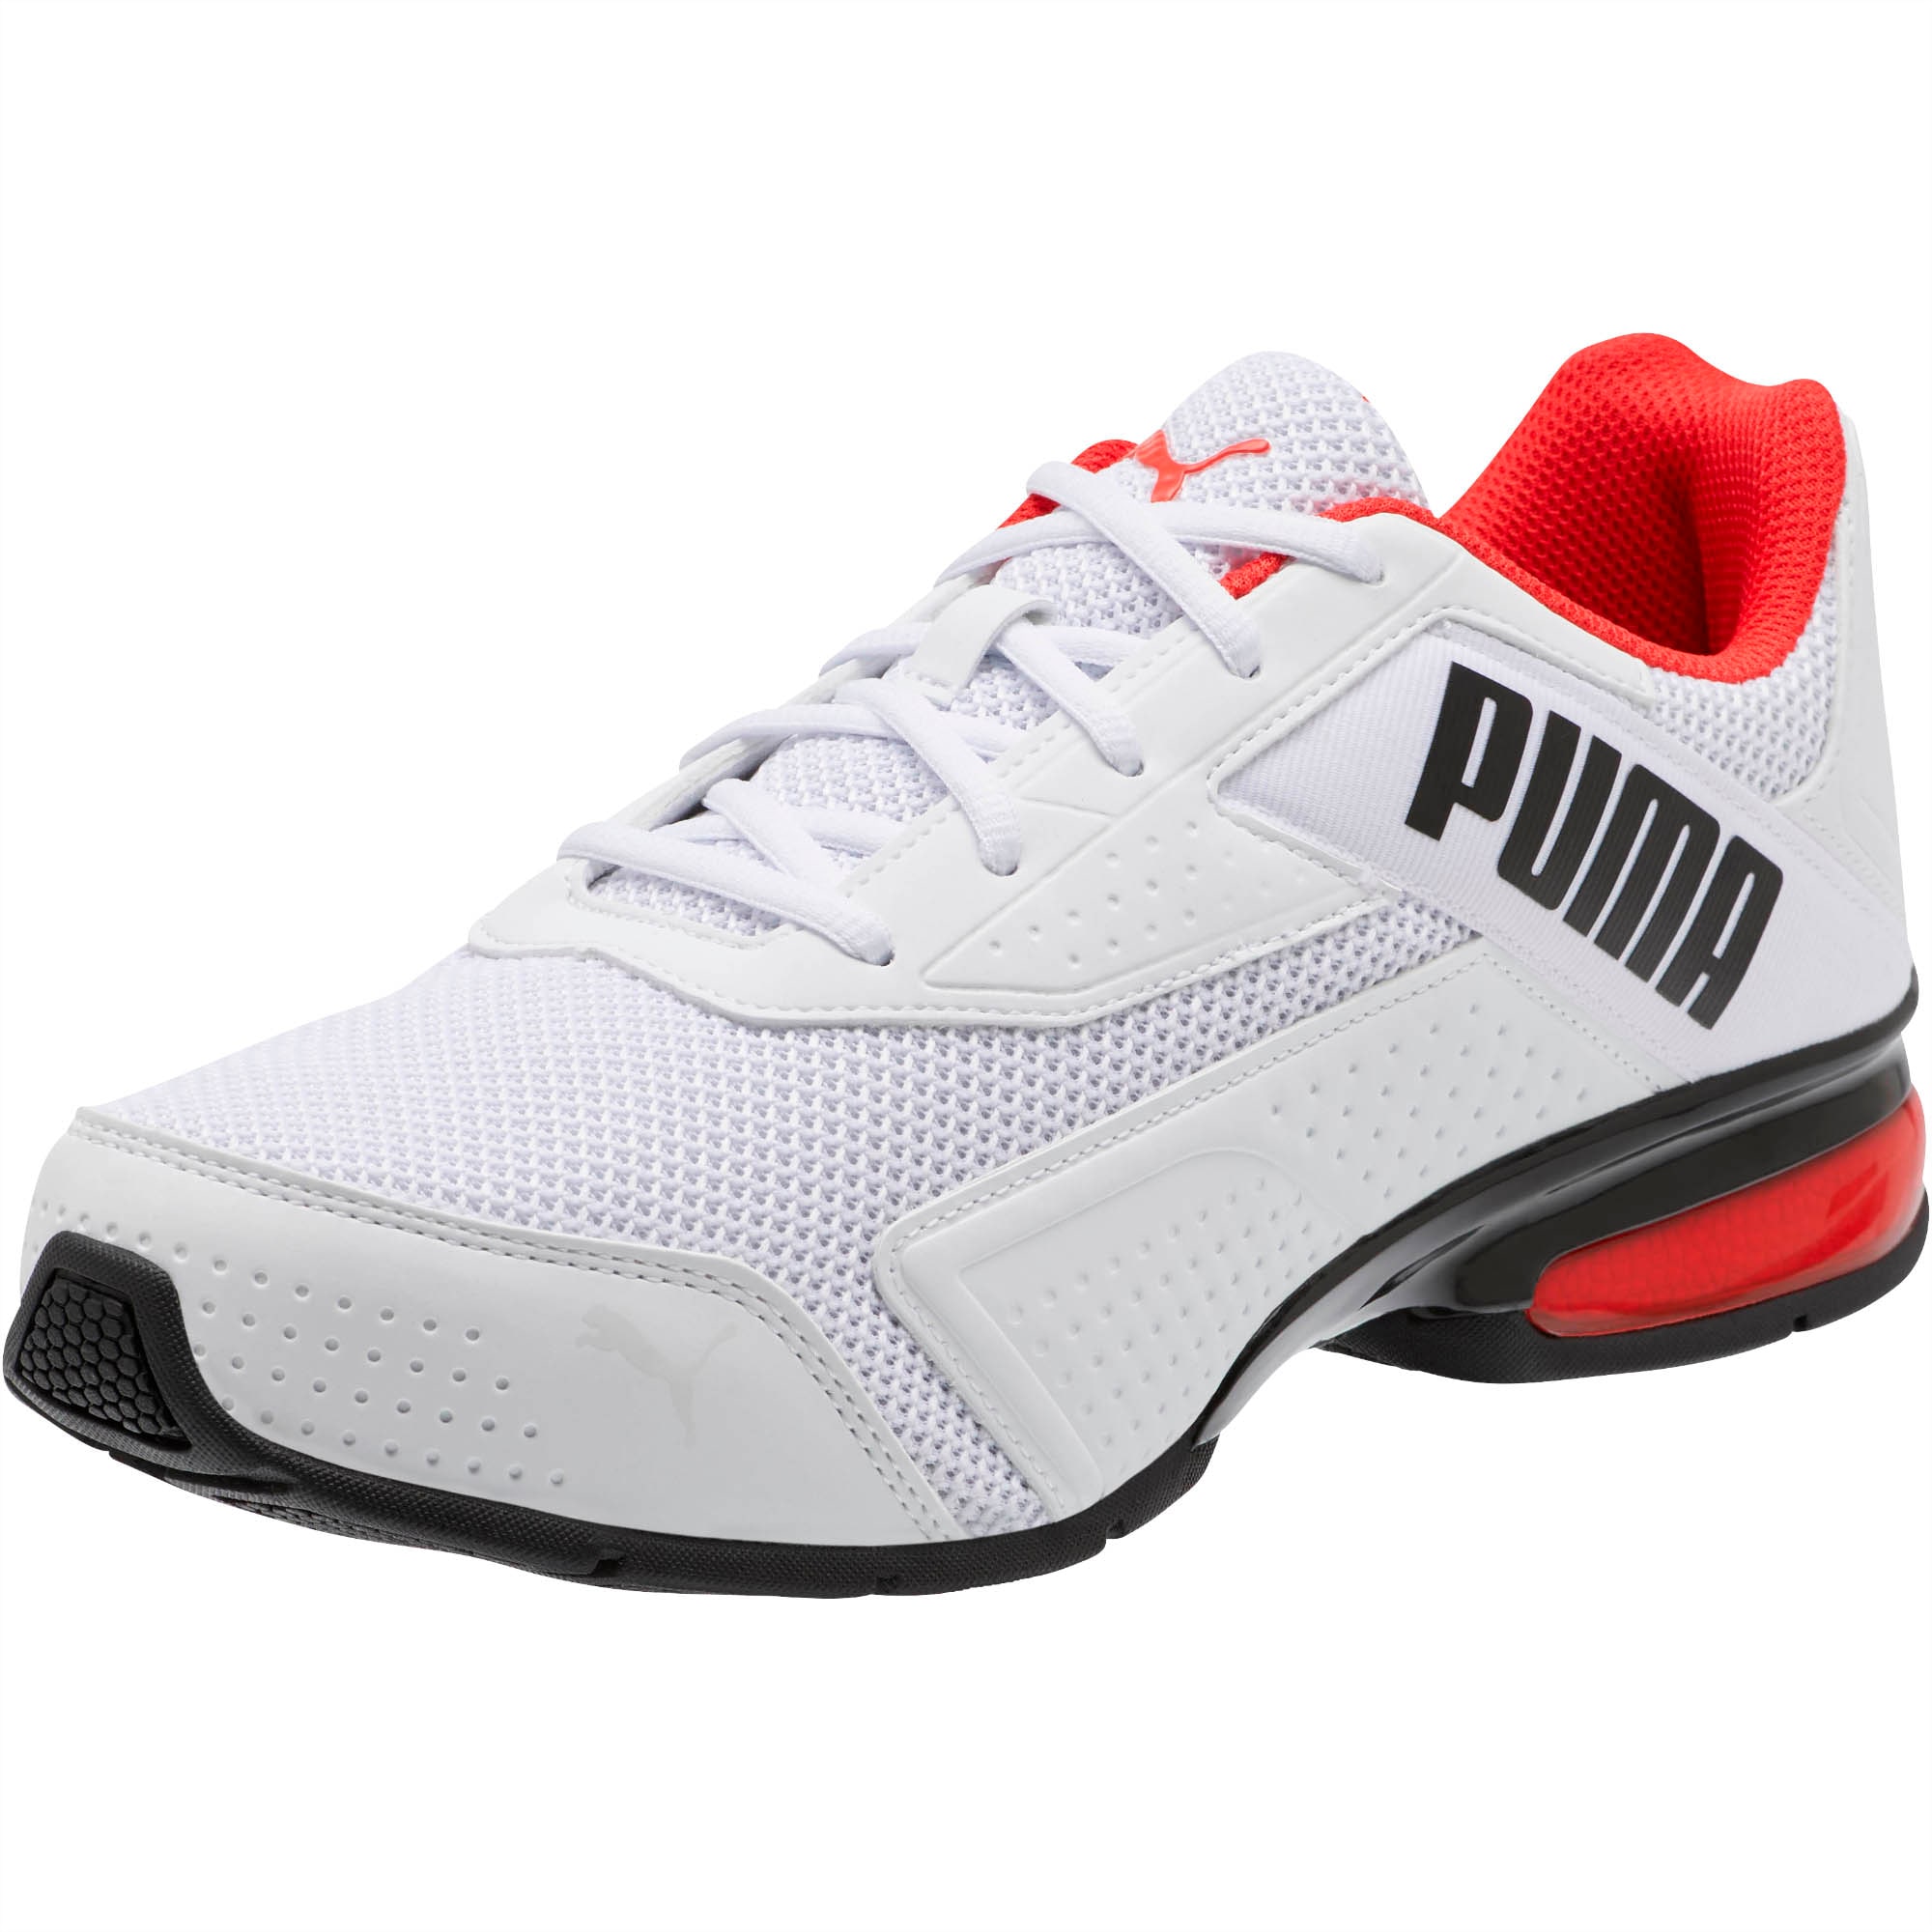 puma men's cross training shoes